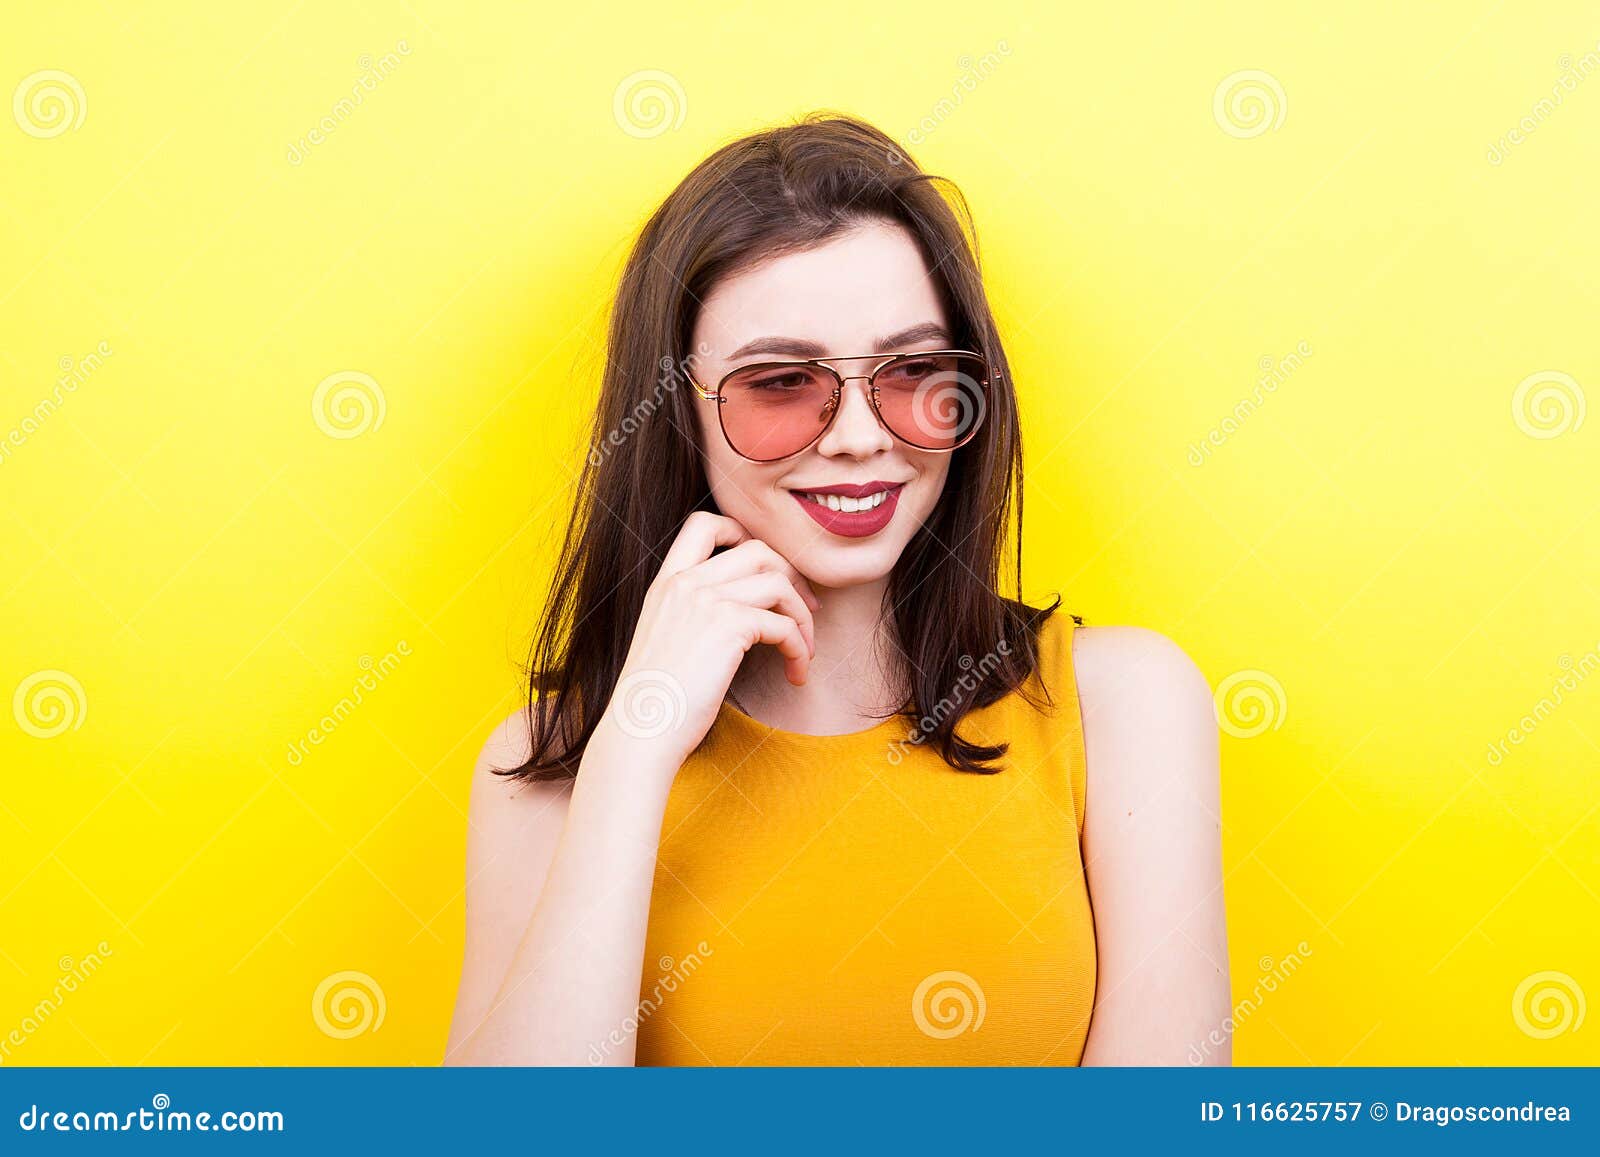 Woman wearing sunglasses stock image. Image of bright - 116625757